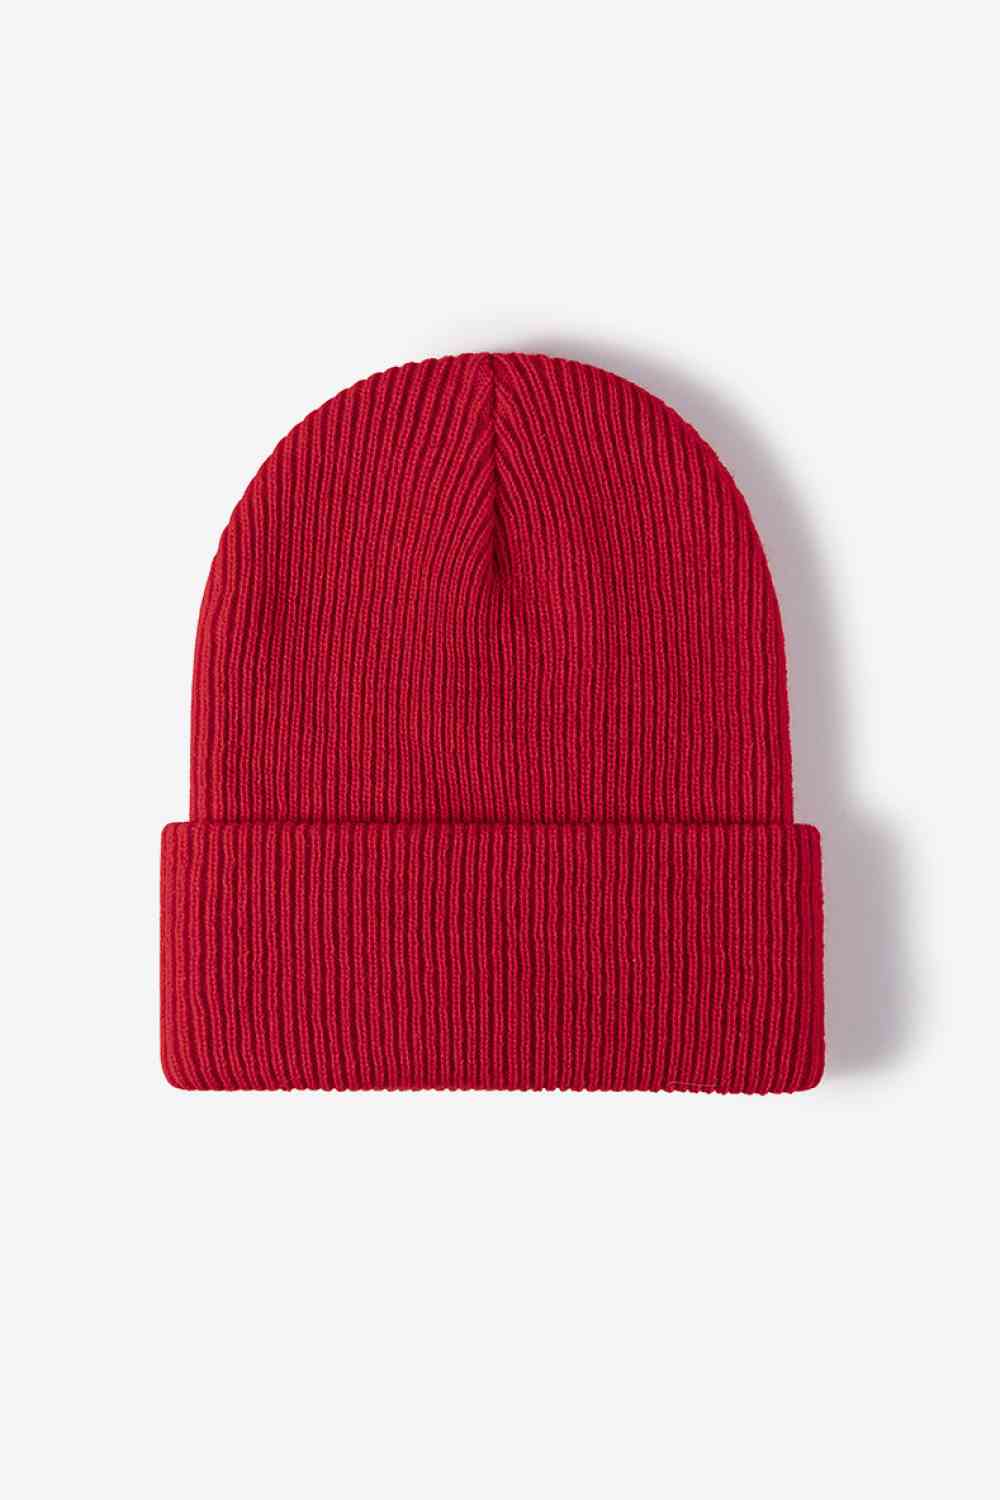 Warm Winter Knit Beanie Red One Size